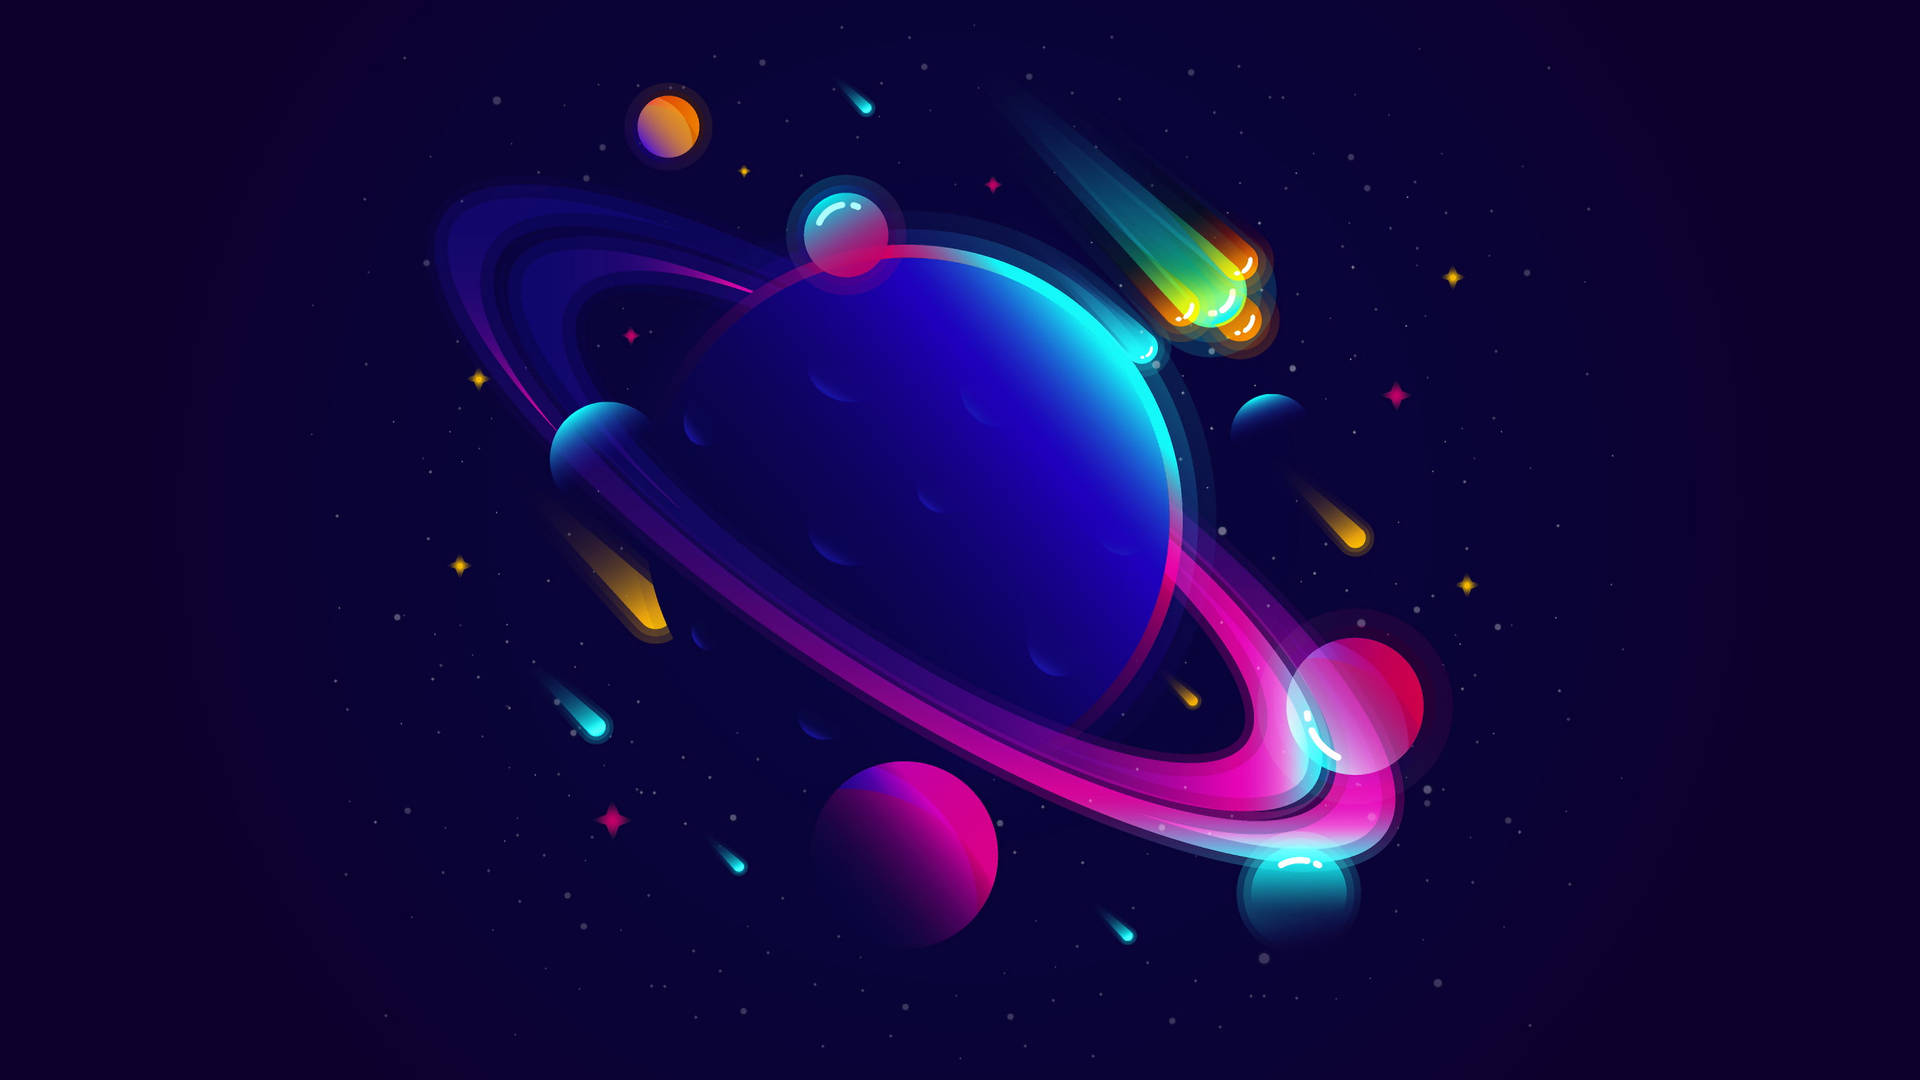 Creative Galaxy Planet Purple Picture